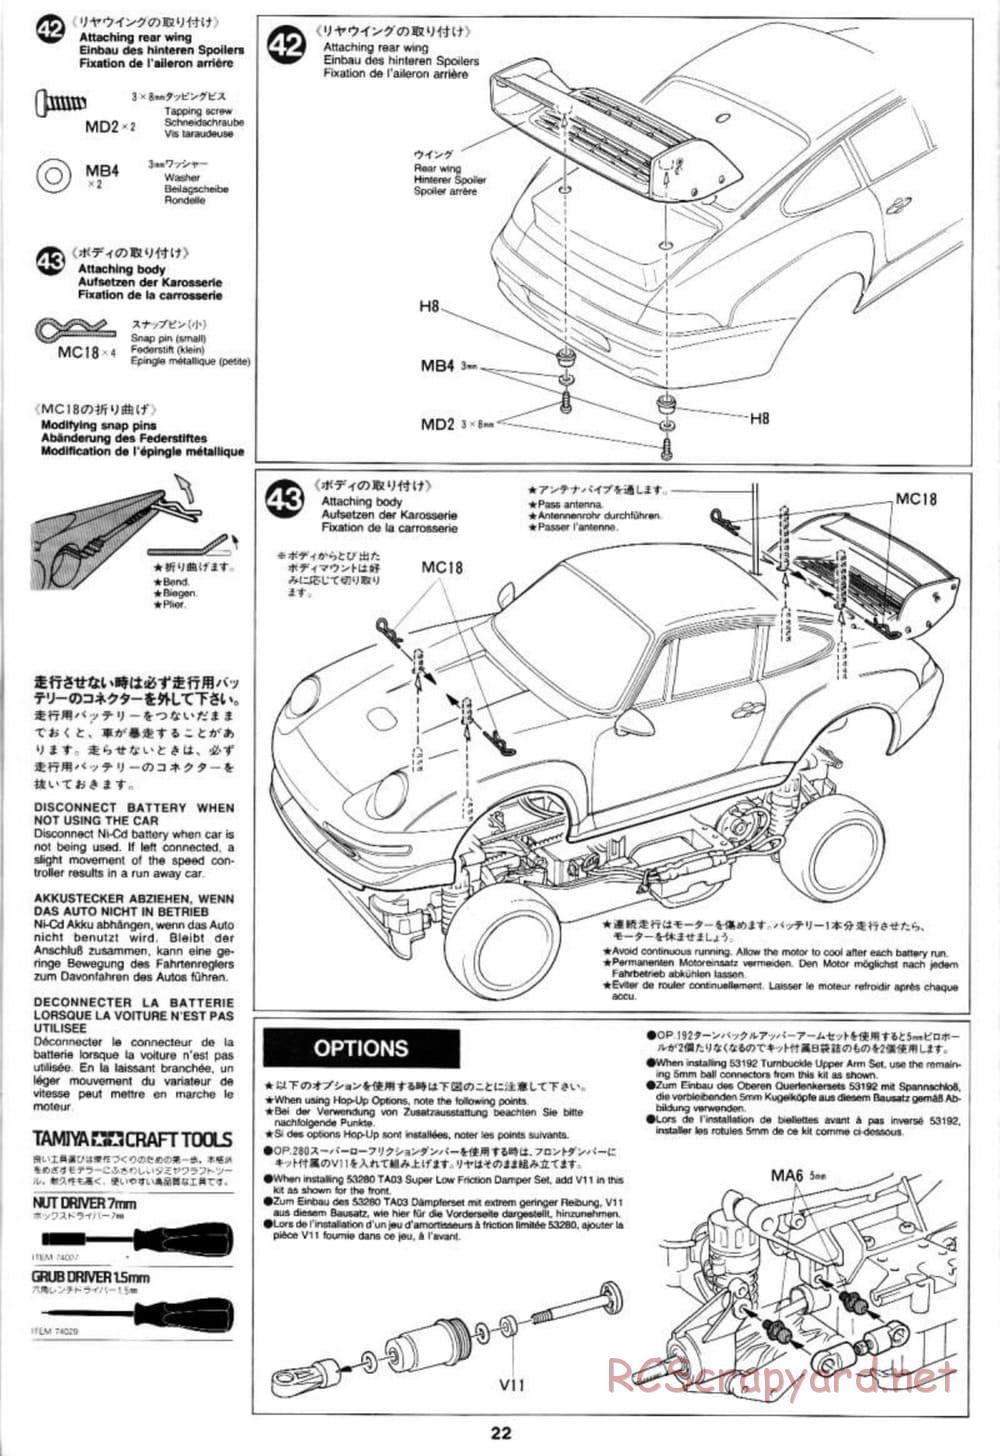 Tamiya - PIAA Porsche 911 - TA-03RS Chassis - Manual - Page 22